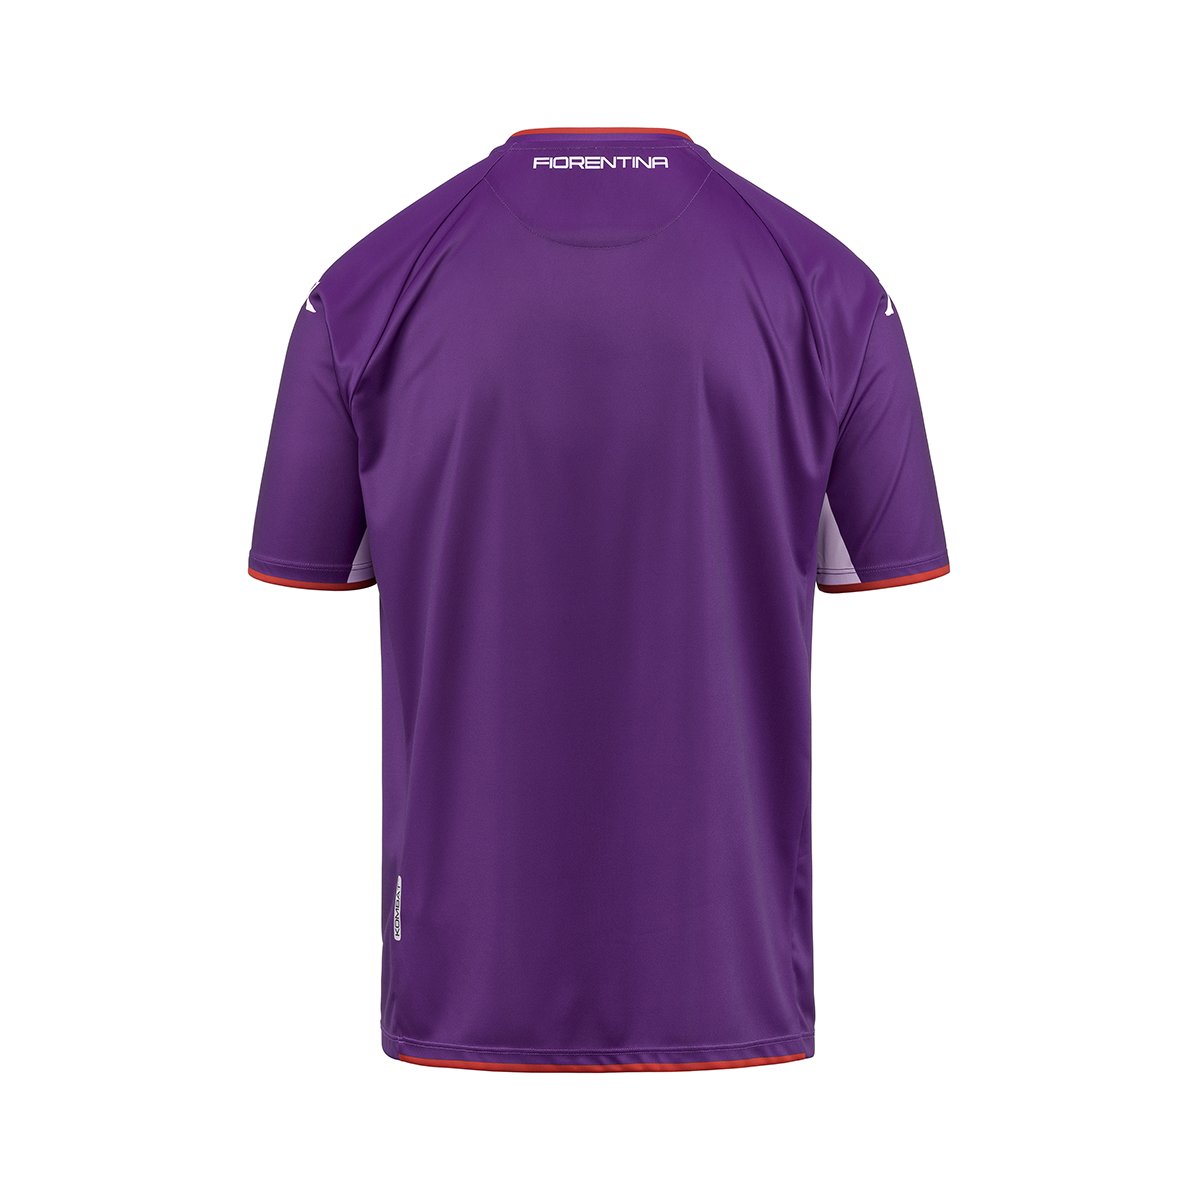 Camiseta Kombat Home Fiorentina niño Púrpura - Imagen 2